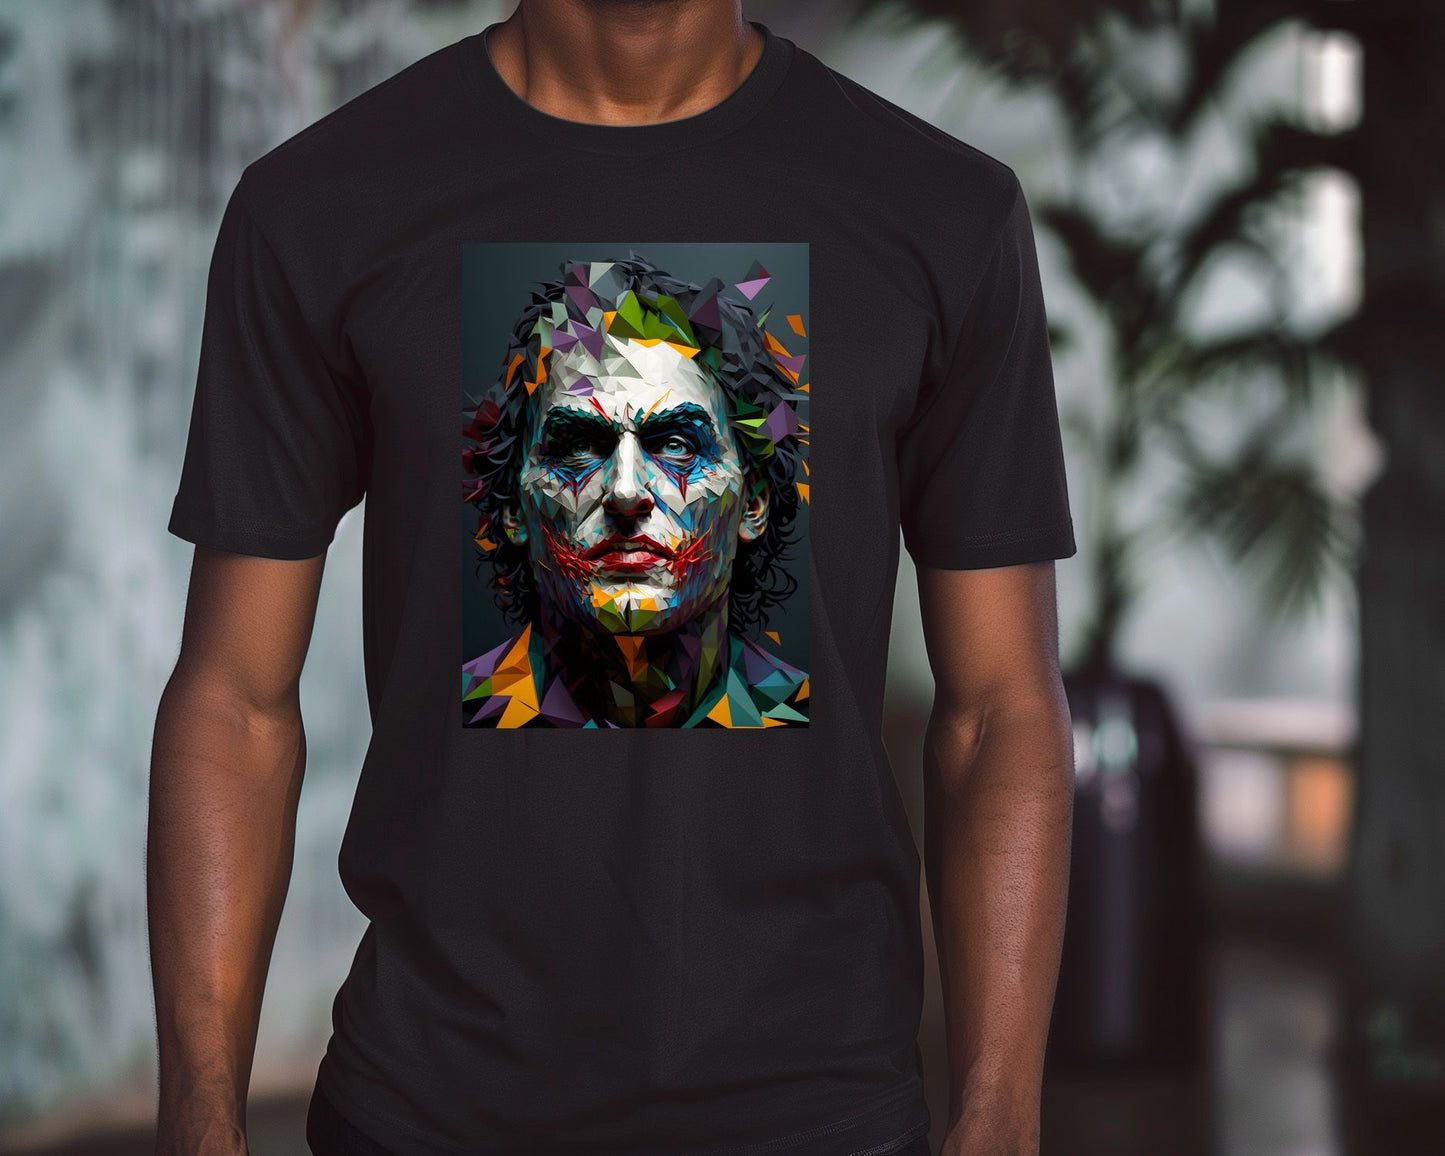 Joker Pop Art - @WpapArtist